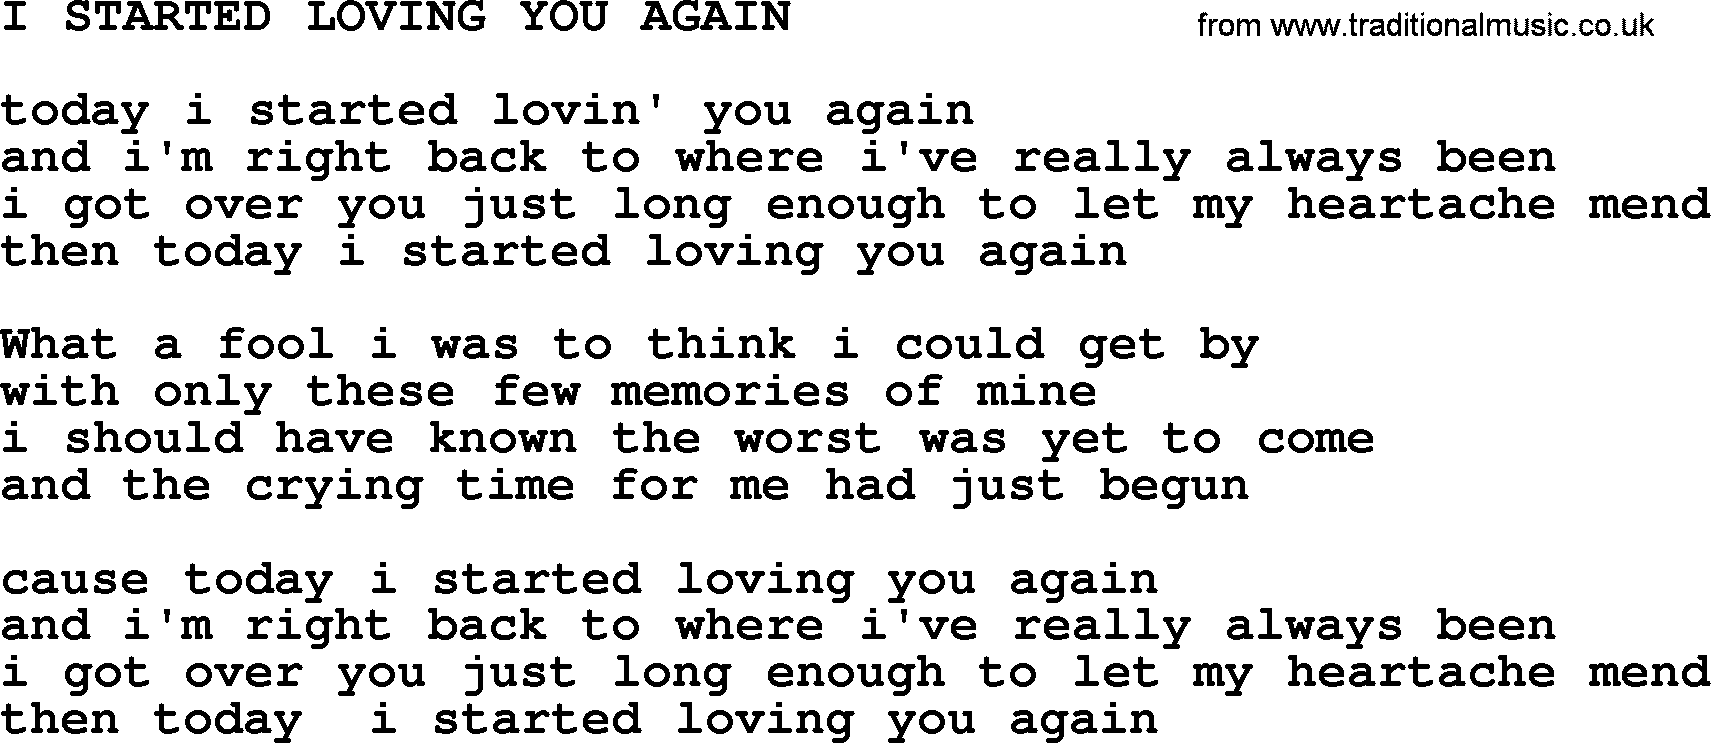 Merle Haggard song: I Started Loving You Again, lyrics.